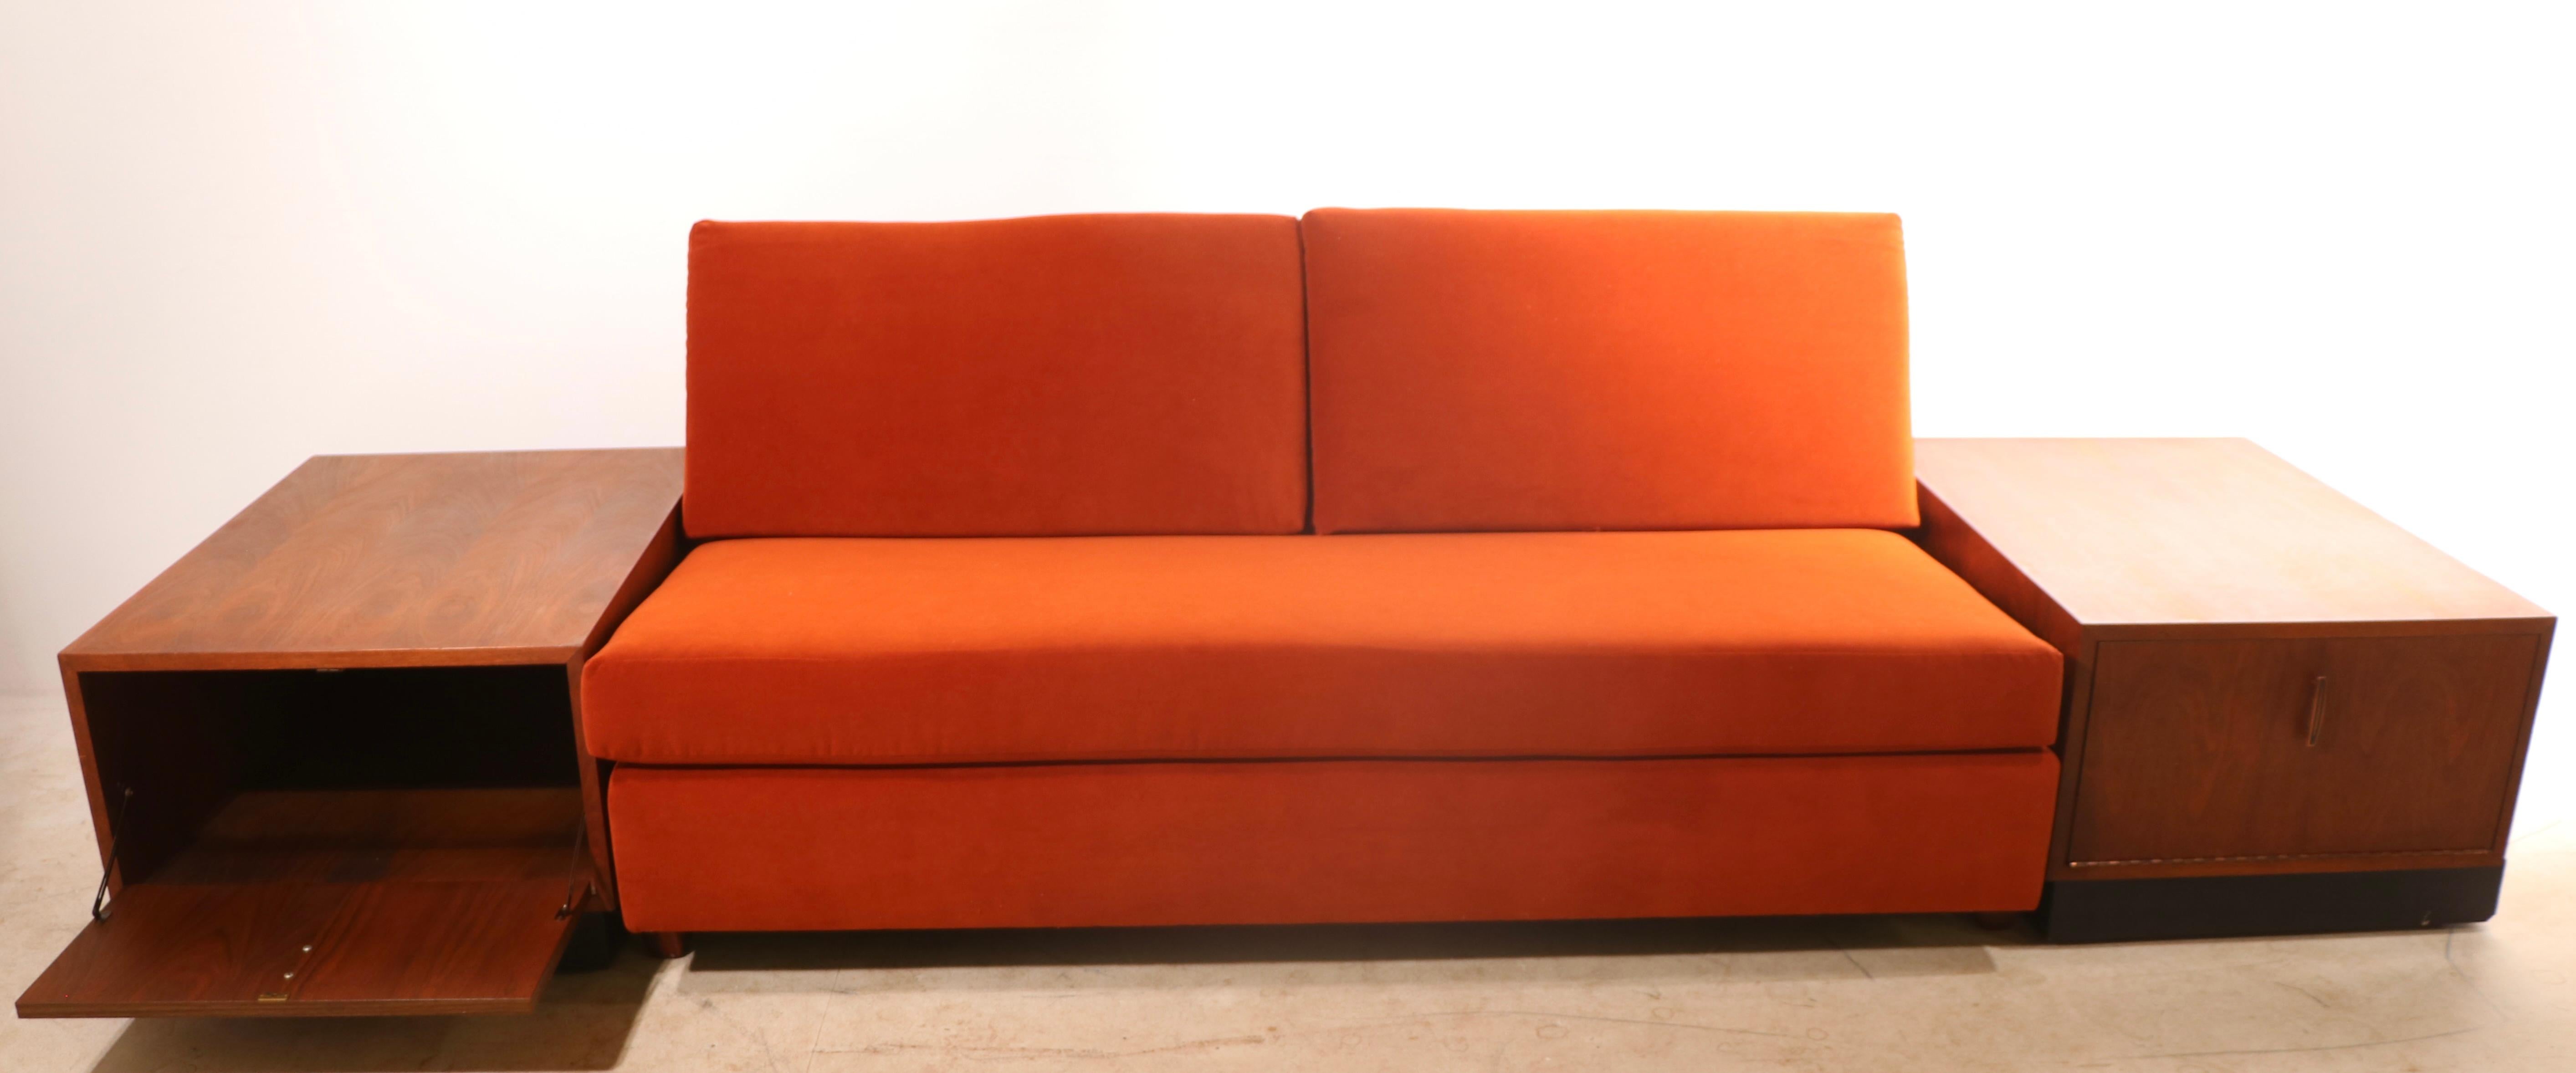 storage sofa bench